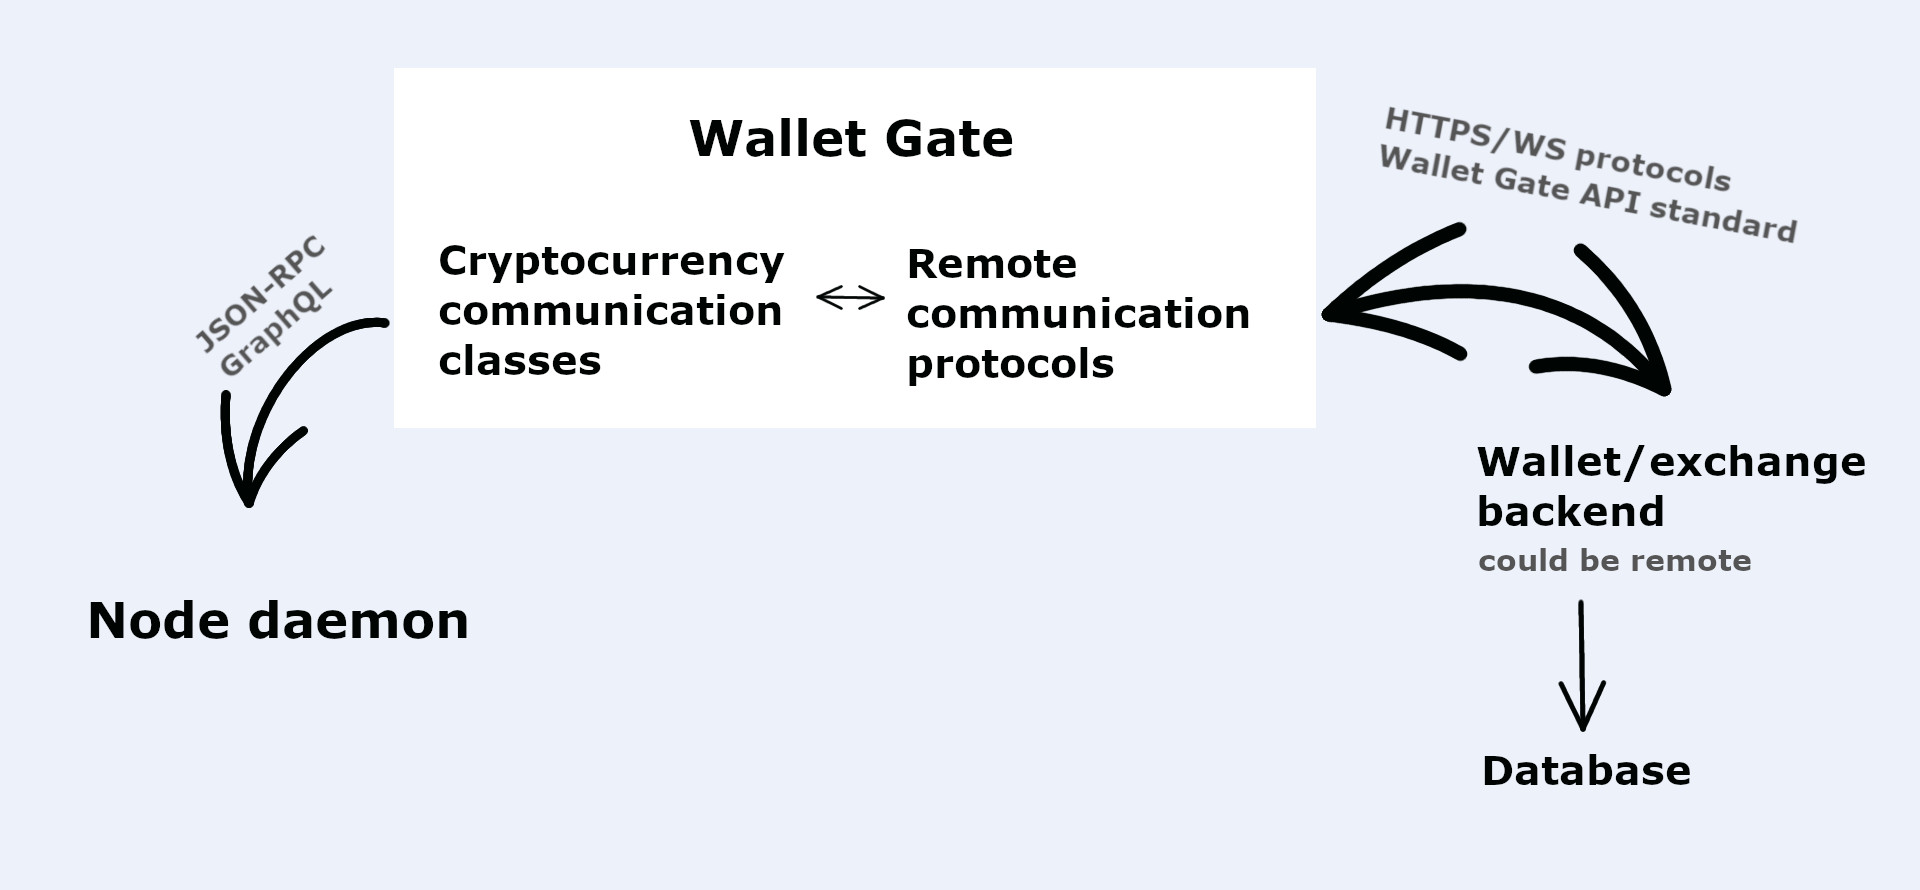 Wallet Gate description sketch